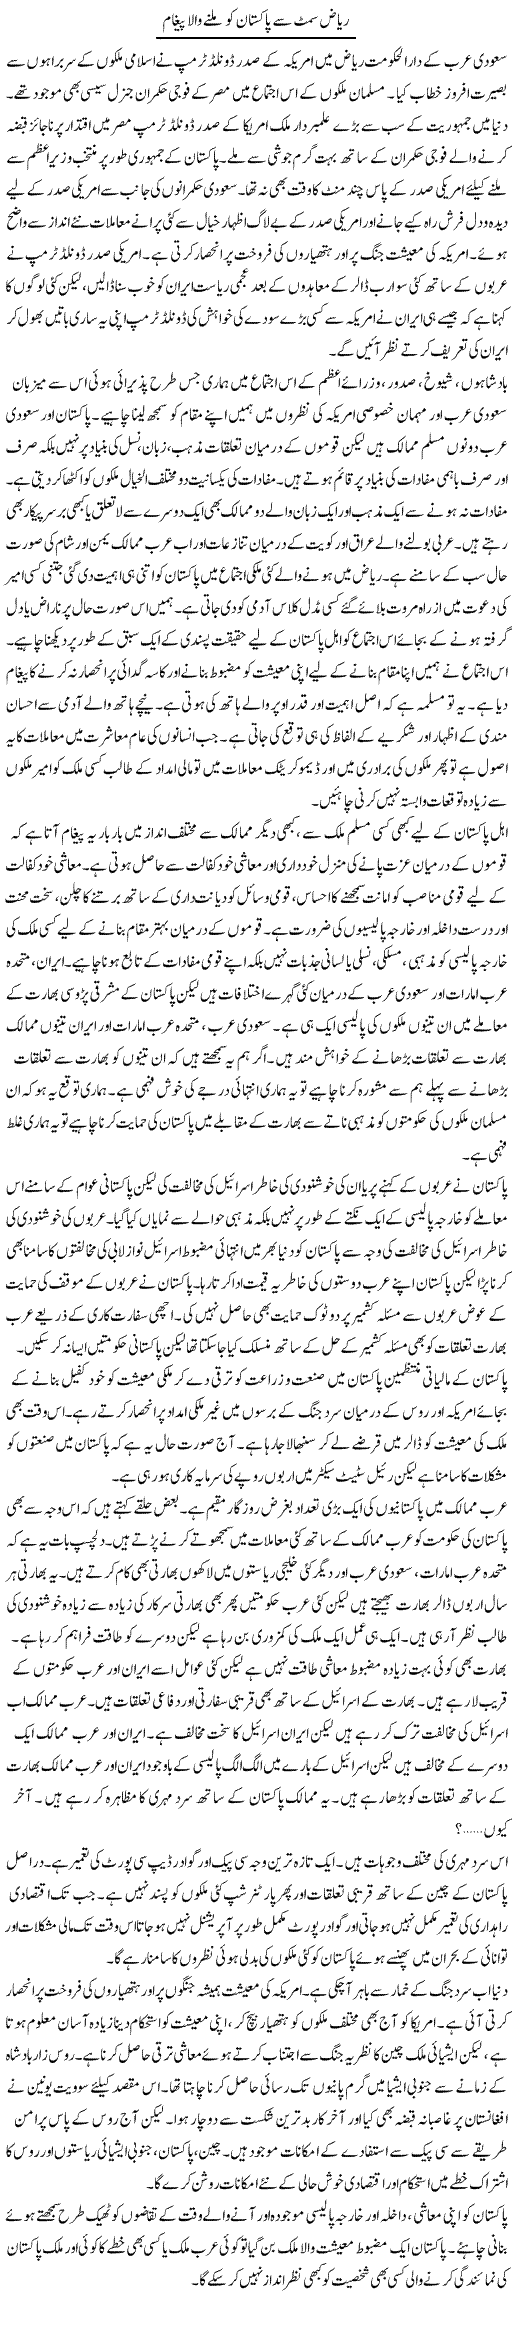 Riaz Summit Se Pakistan Ko Milnay Wala Pegham | Dr. Waqar Yousuf Azeemi | Daily Urdu Columns